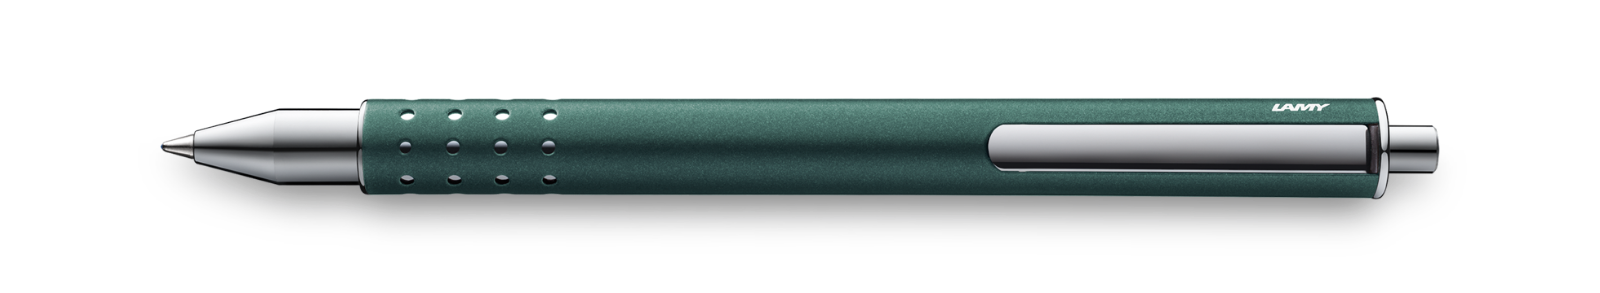 L355RB Lamy Swift Rollerball Pen in Racing Green NEW in original box 